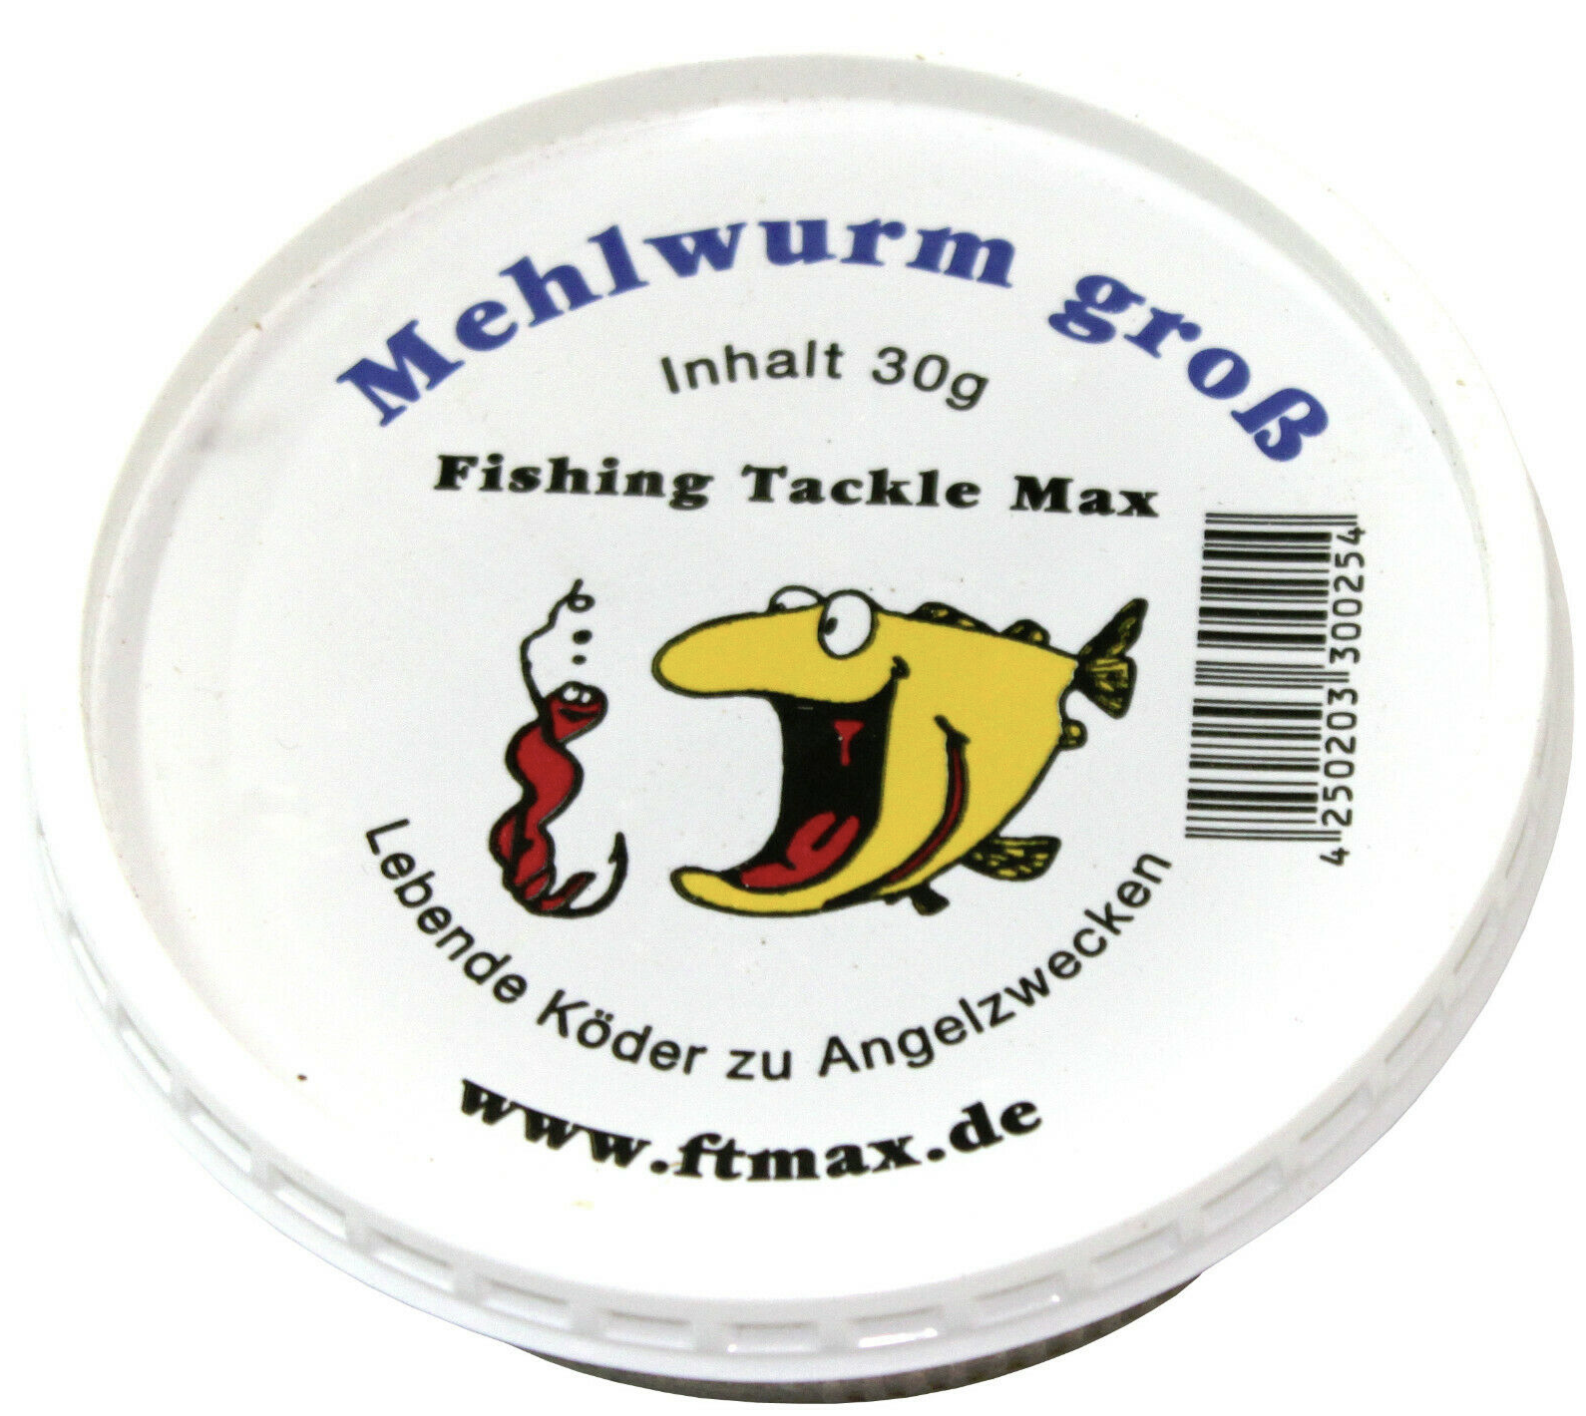 FTM Mehlwurm groß Dose